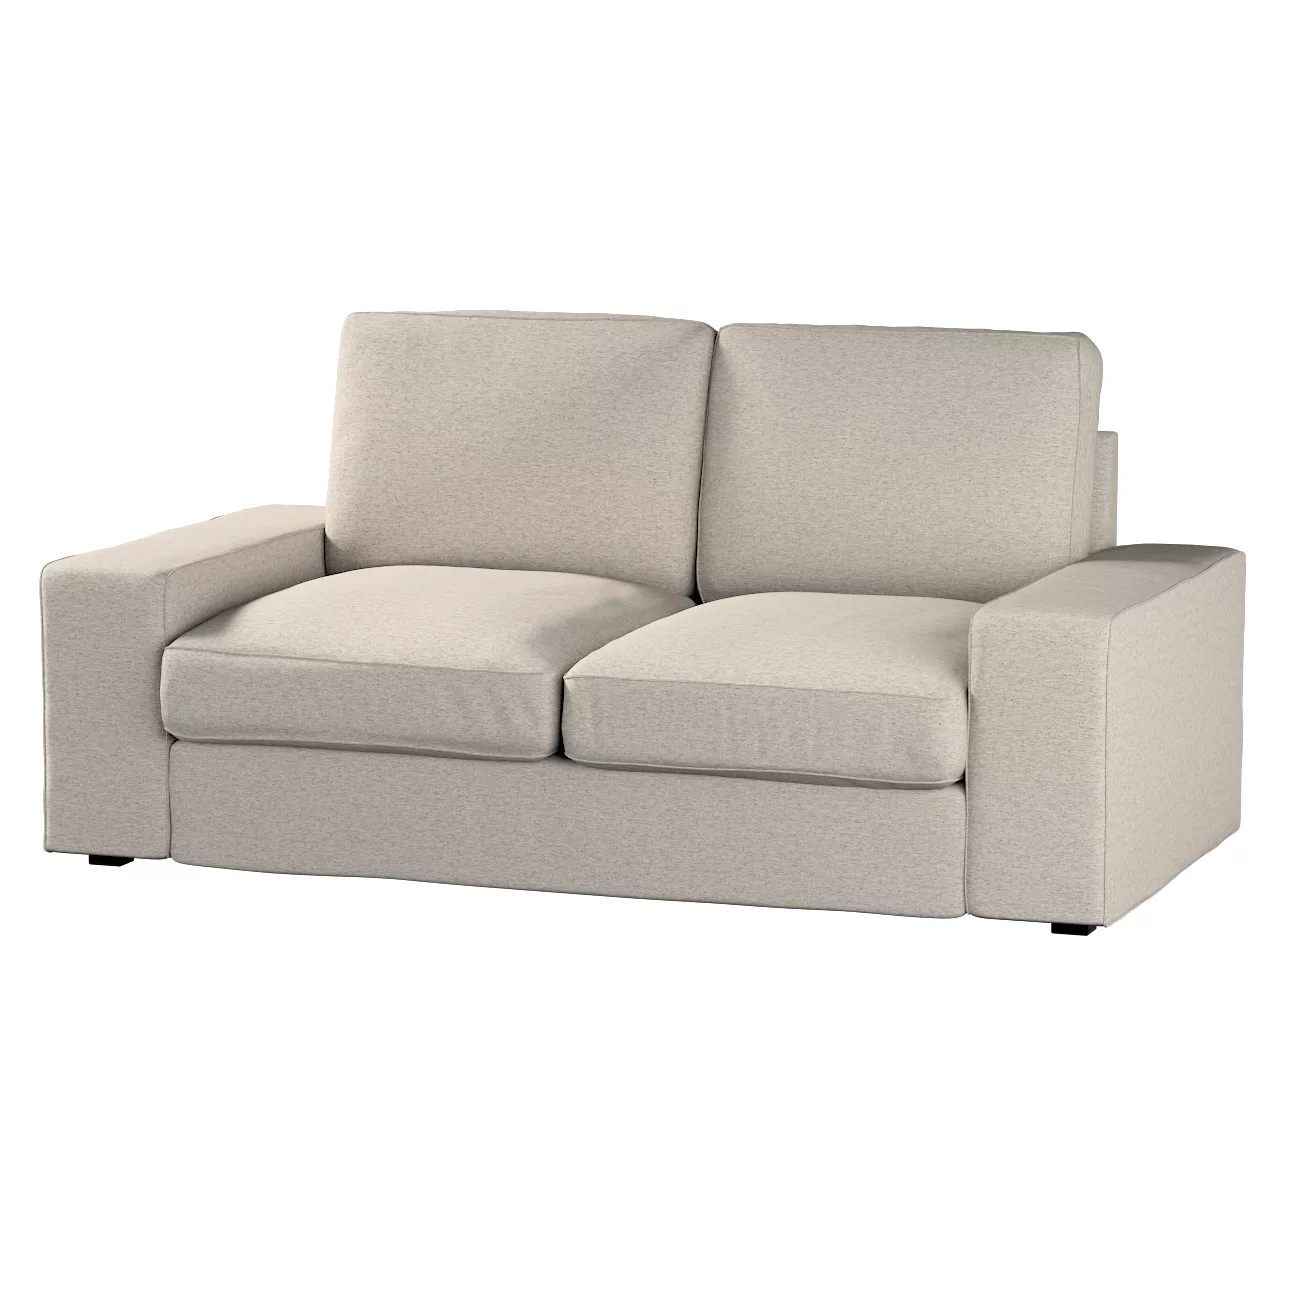 Bezug für Kivik 2-Sitzer Sofa, grau-beige, Bezug für Sofa Kivik 2-Sitzer, M günstig online kaufen